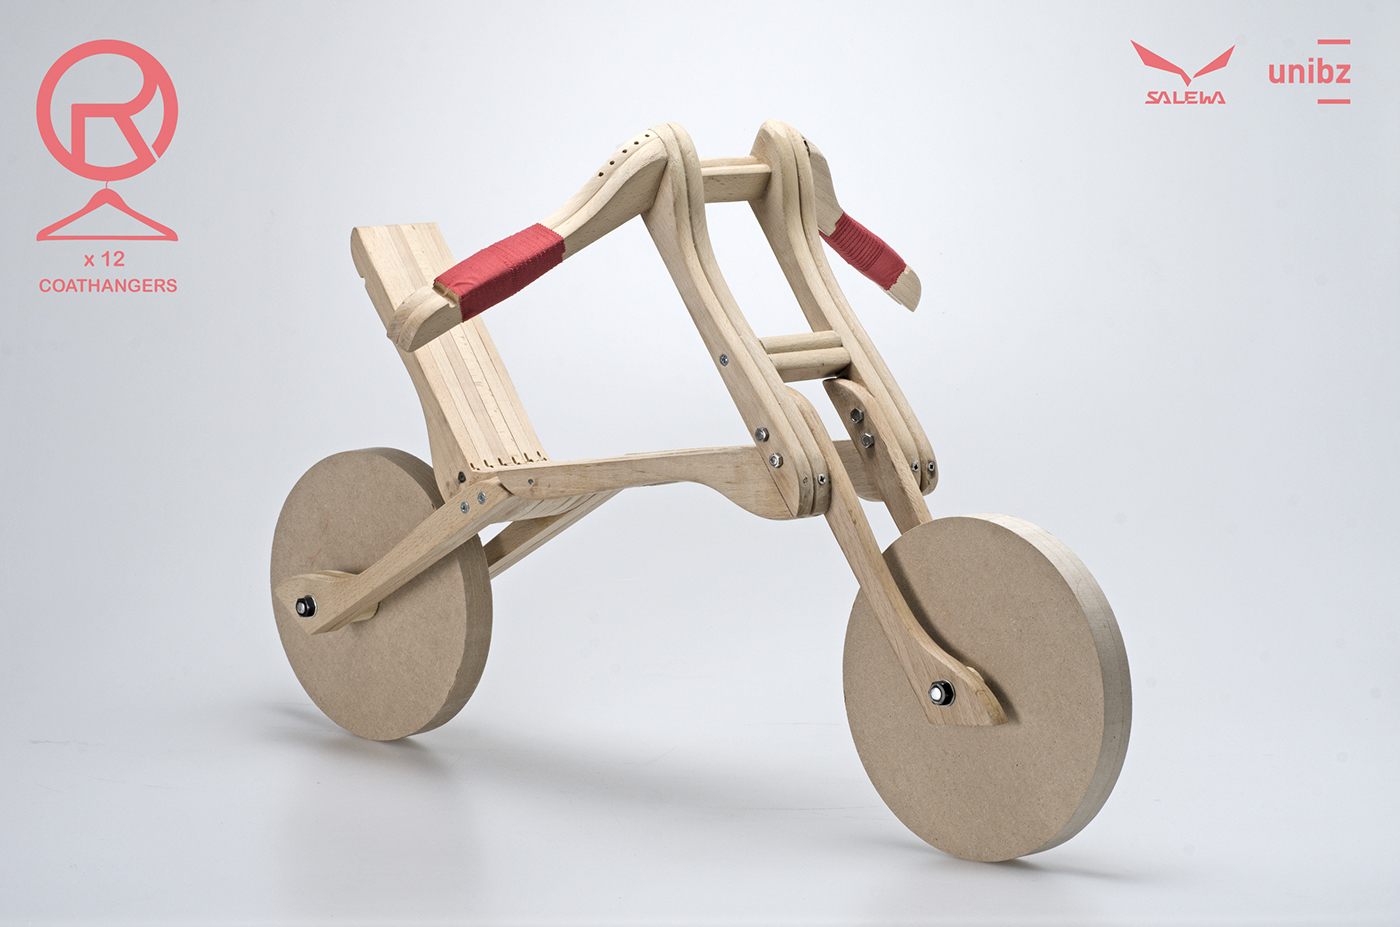 Bike toy kid children peru auction University euro red wood upcyling coathangers